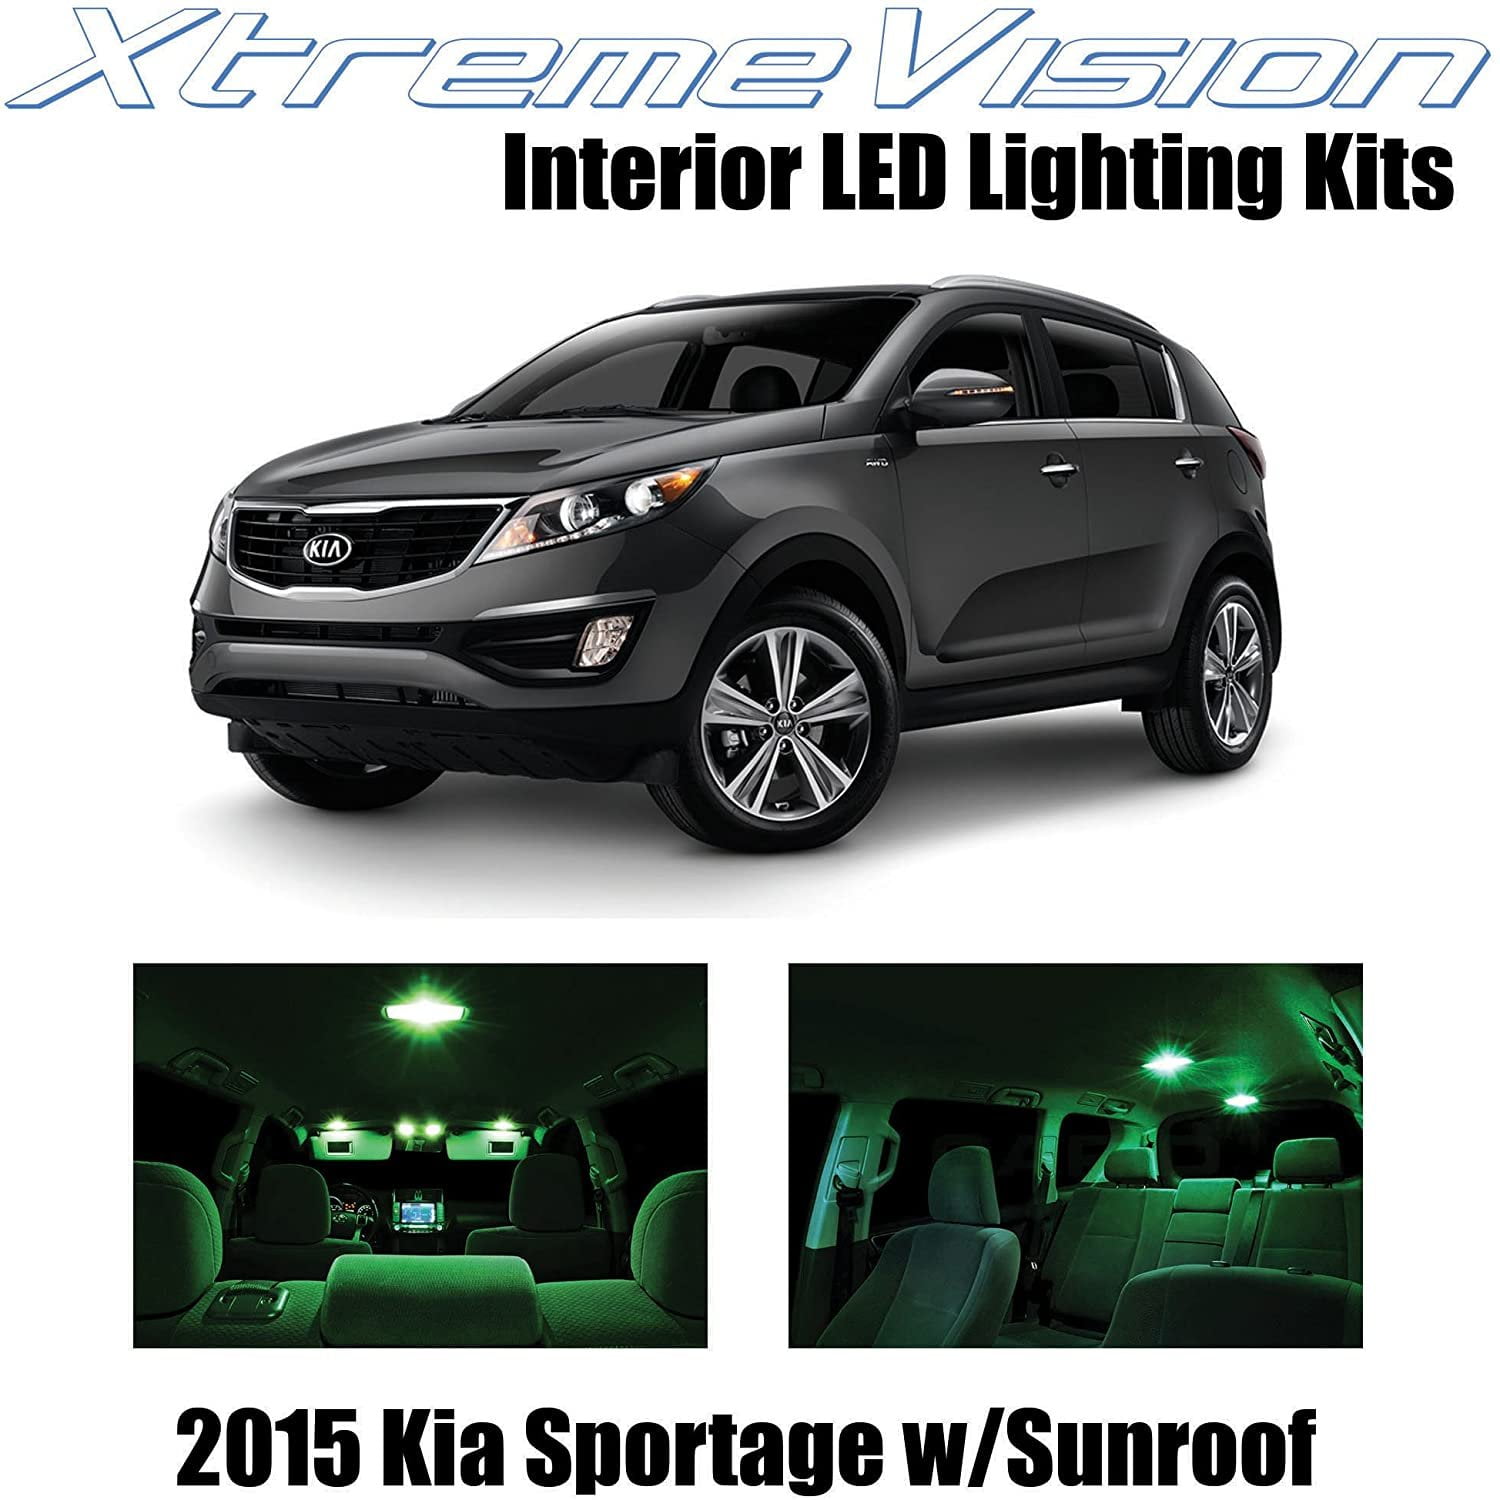 Administración Dejar abajo flor XtremeVision Interior LED for Kia Sportage w/Panoramic Sunroof 2015 8 pcs  Green Interior LED Kit + Installation Tool - Walmart.com